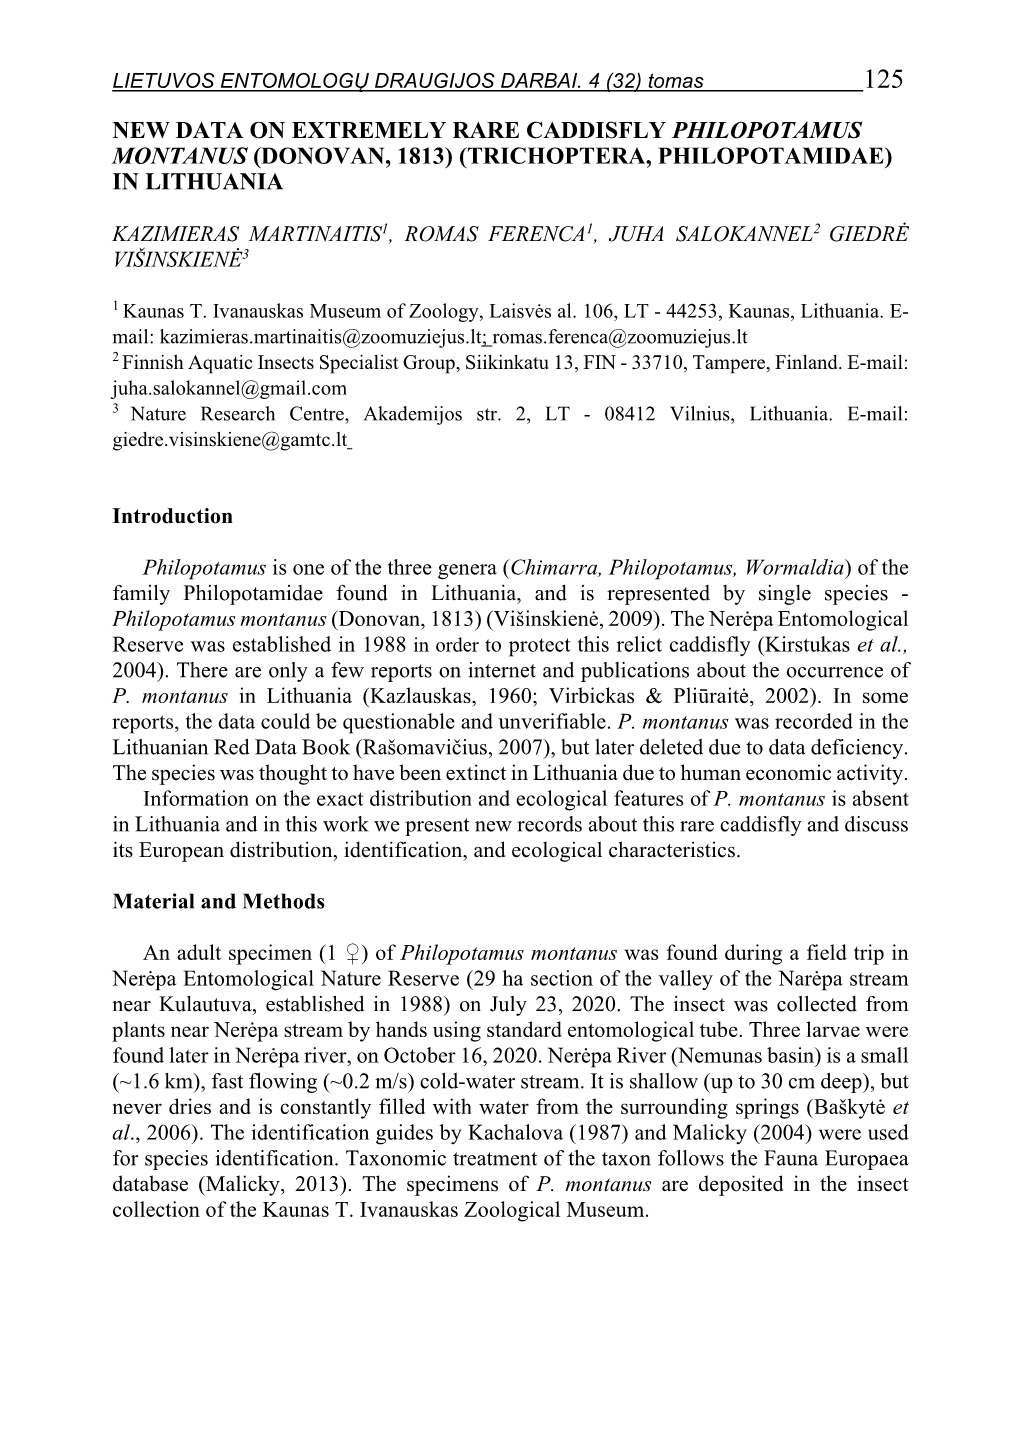 New Data on Extremely Rare Caddisfly Philopotamus Montanus (Donovan, 1813) (Trichoptera, Philopotamidae) in Lithuania